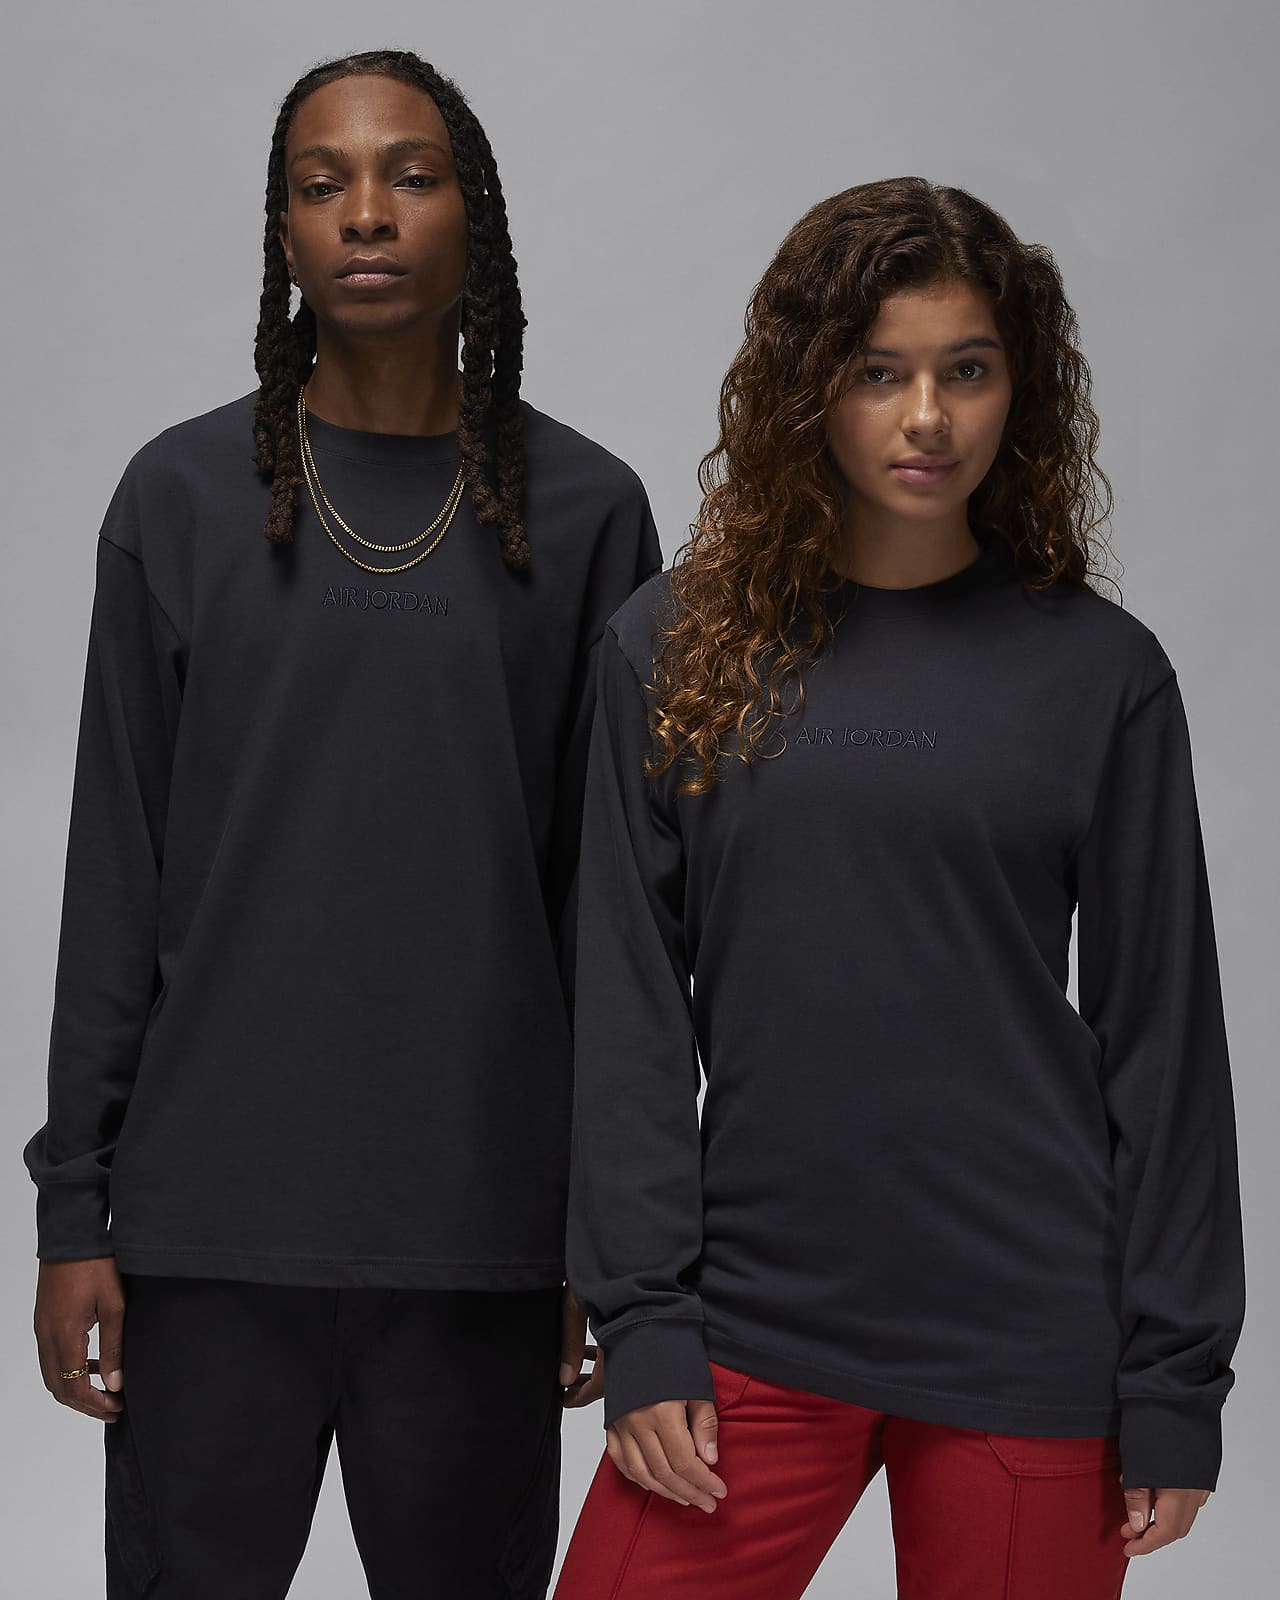 Women's Grey Long Sleeve T-shirt, Black Leggings, Black Suede